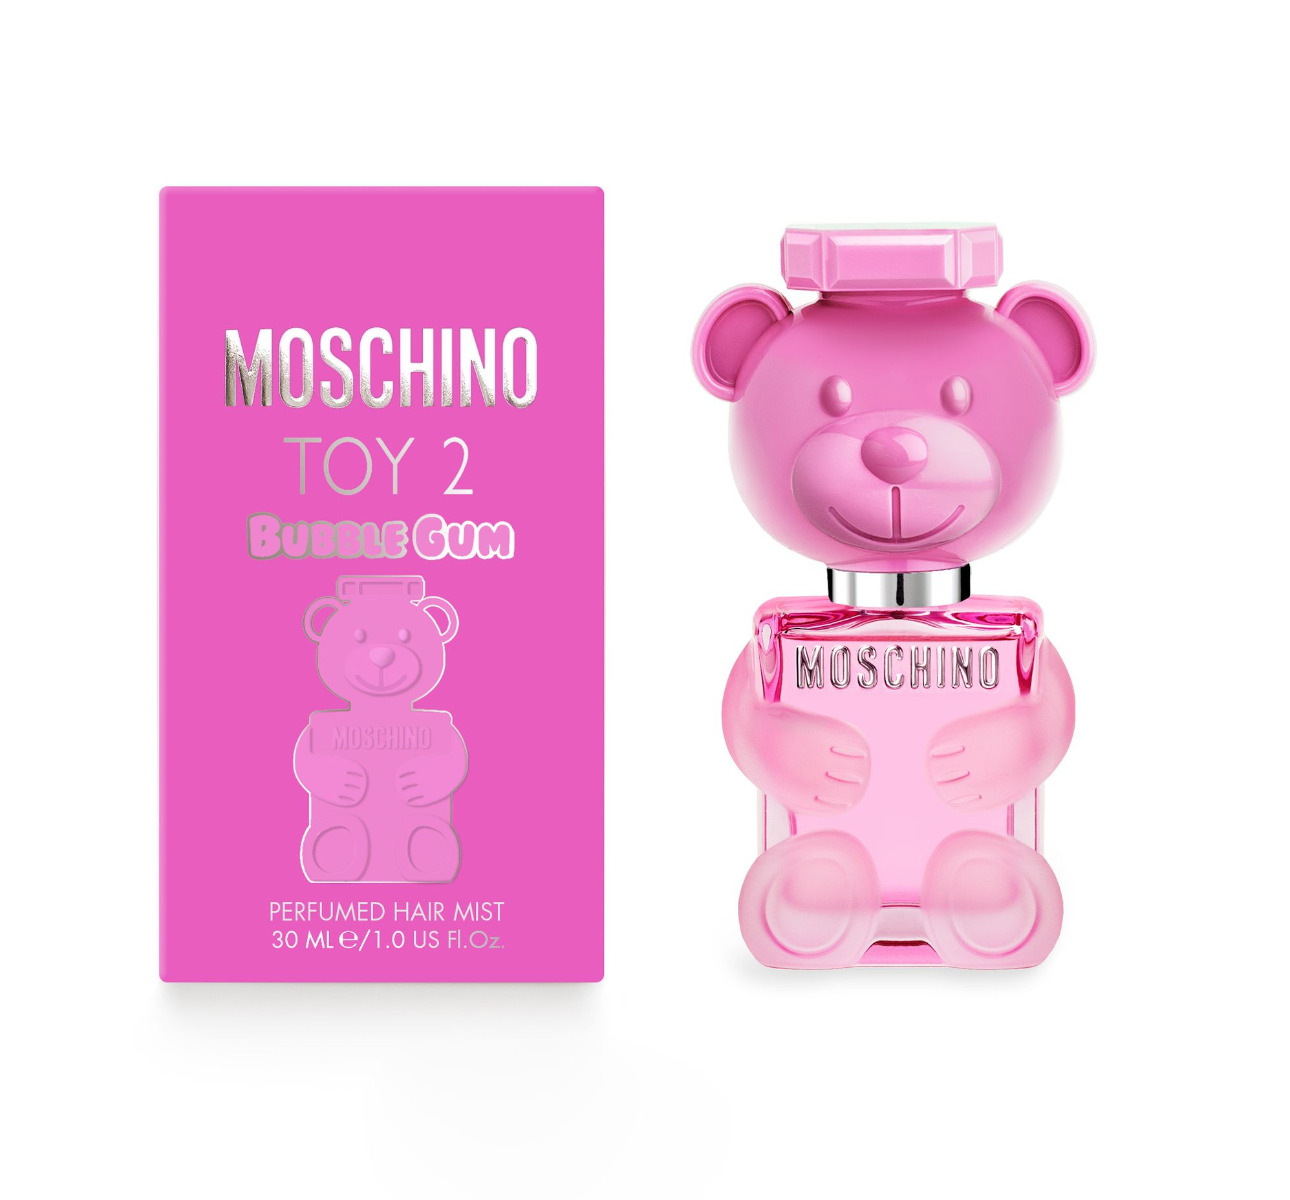 MOSCHINO Toy2 Bubble Gum Hair Mist 30 ml MOSCHINO